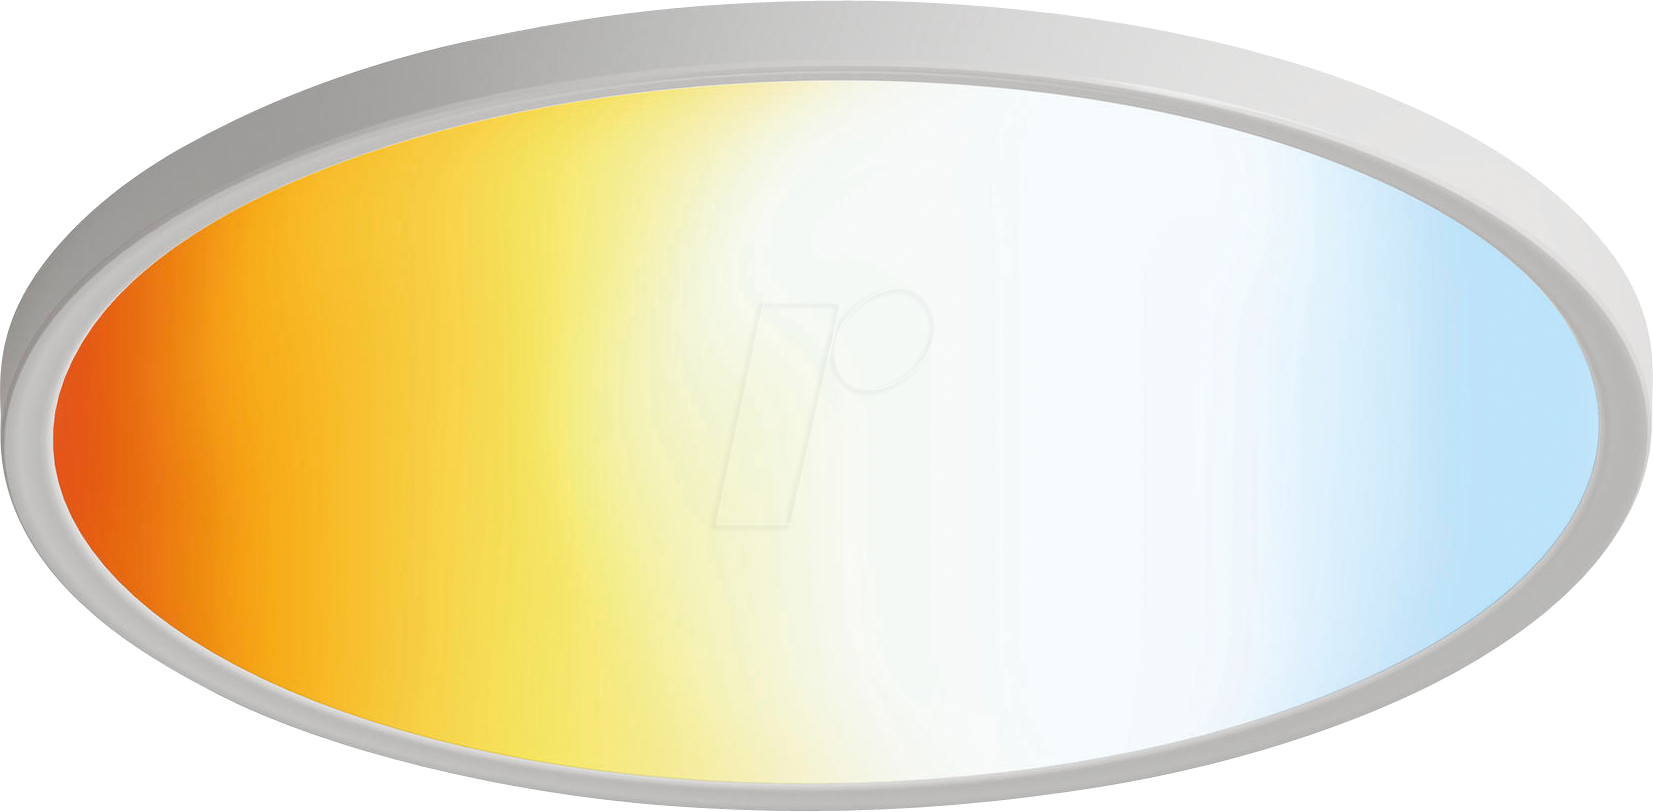 MLI 404094 - Smart Light, tint, Deckenleuchte Amela, 30 cm, tuneable white von TINT